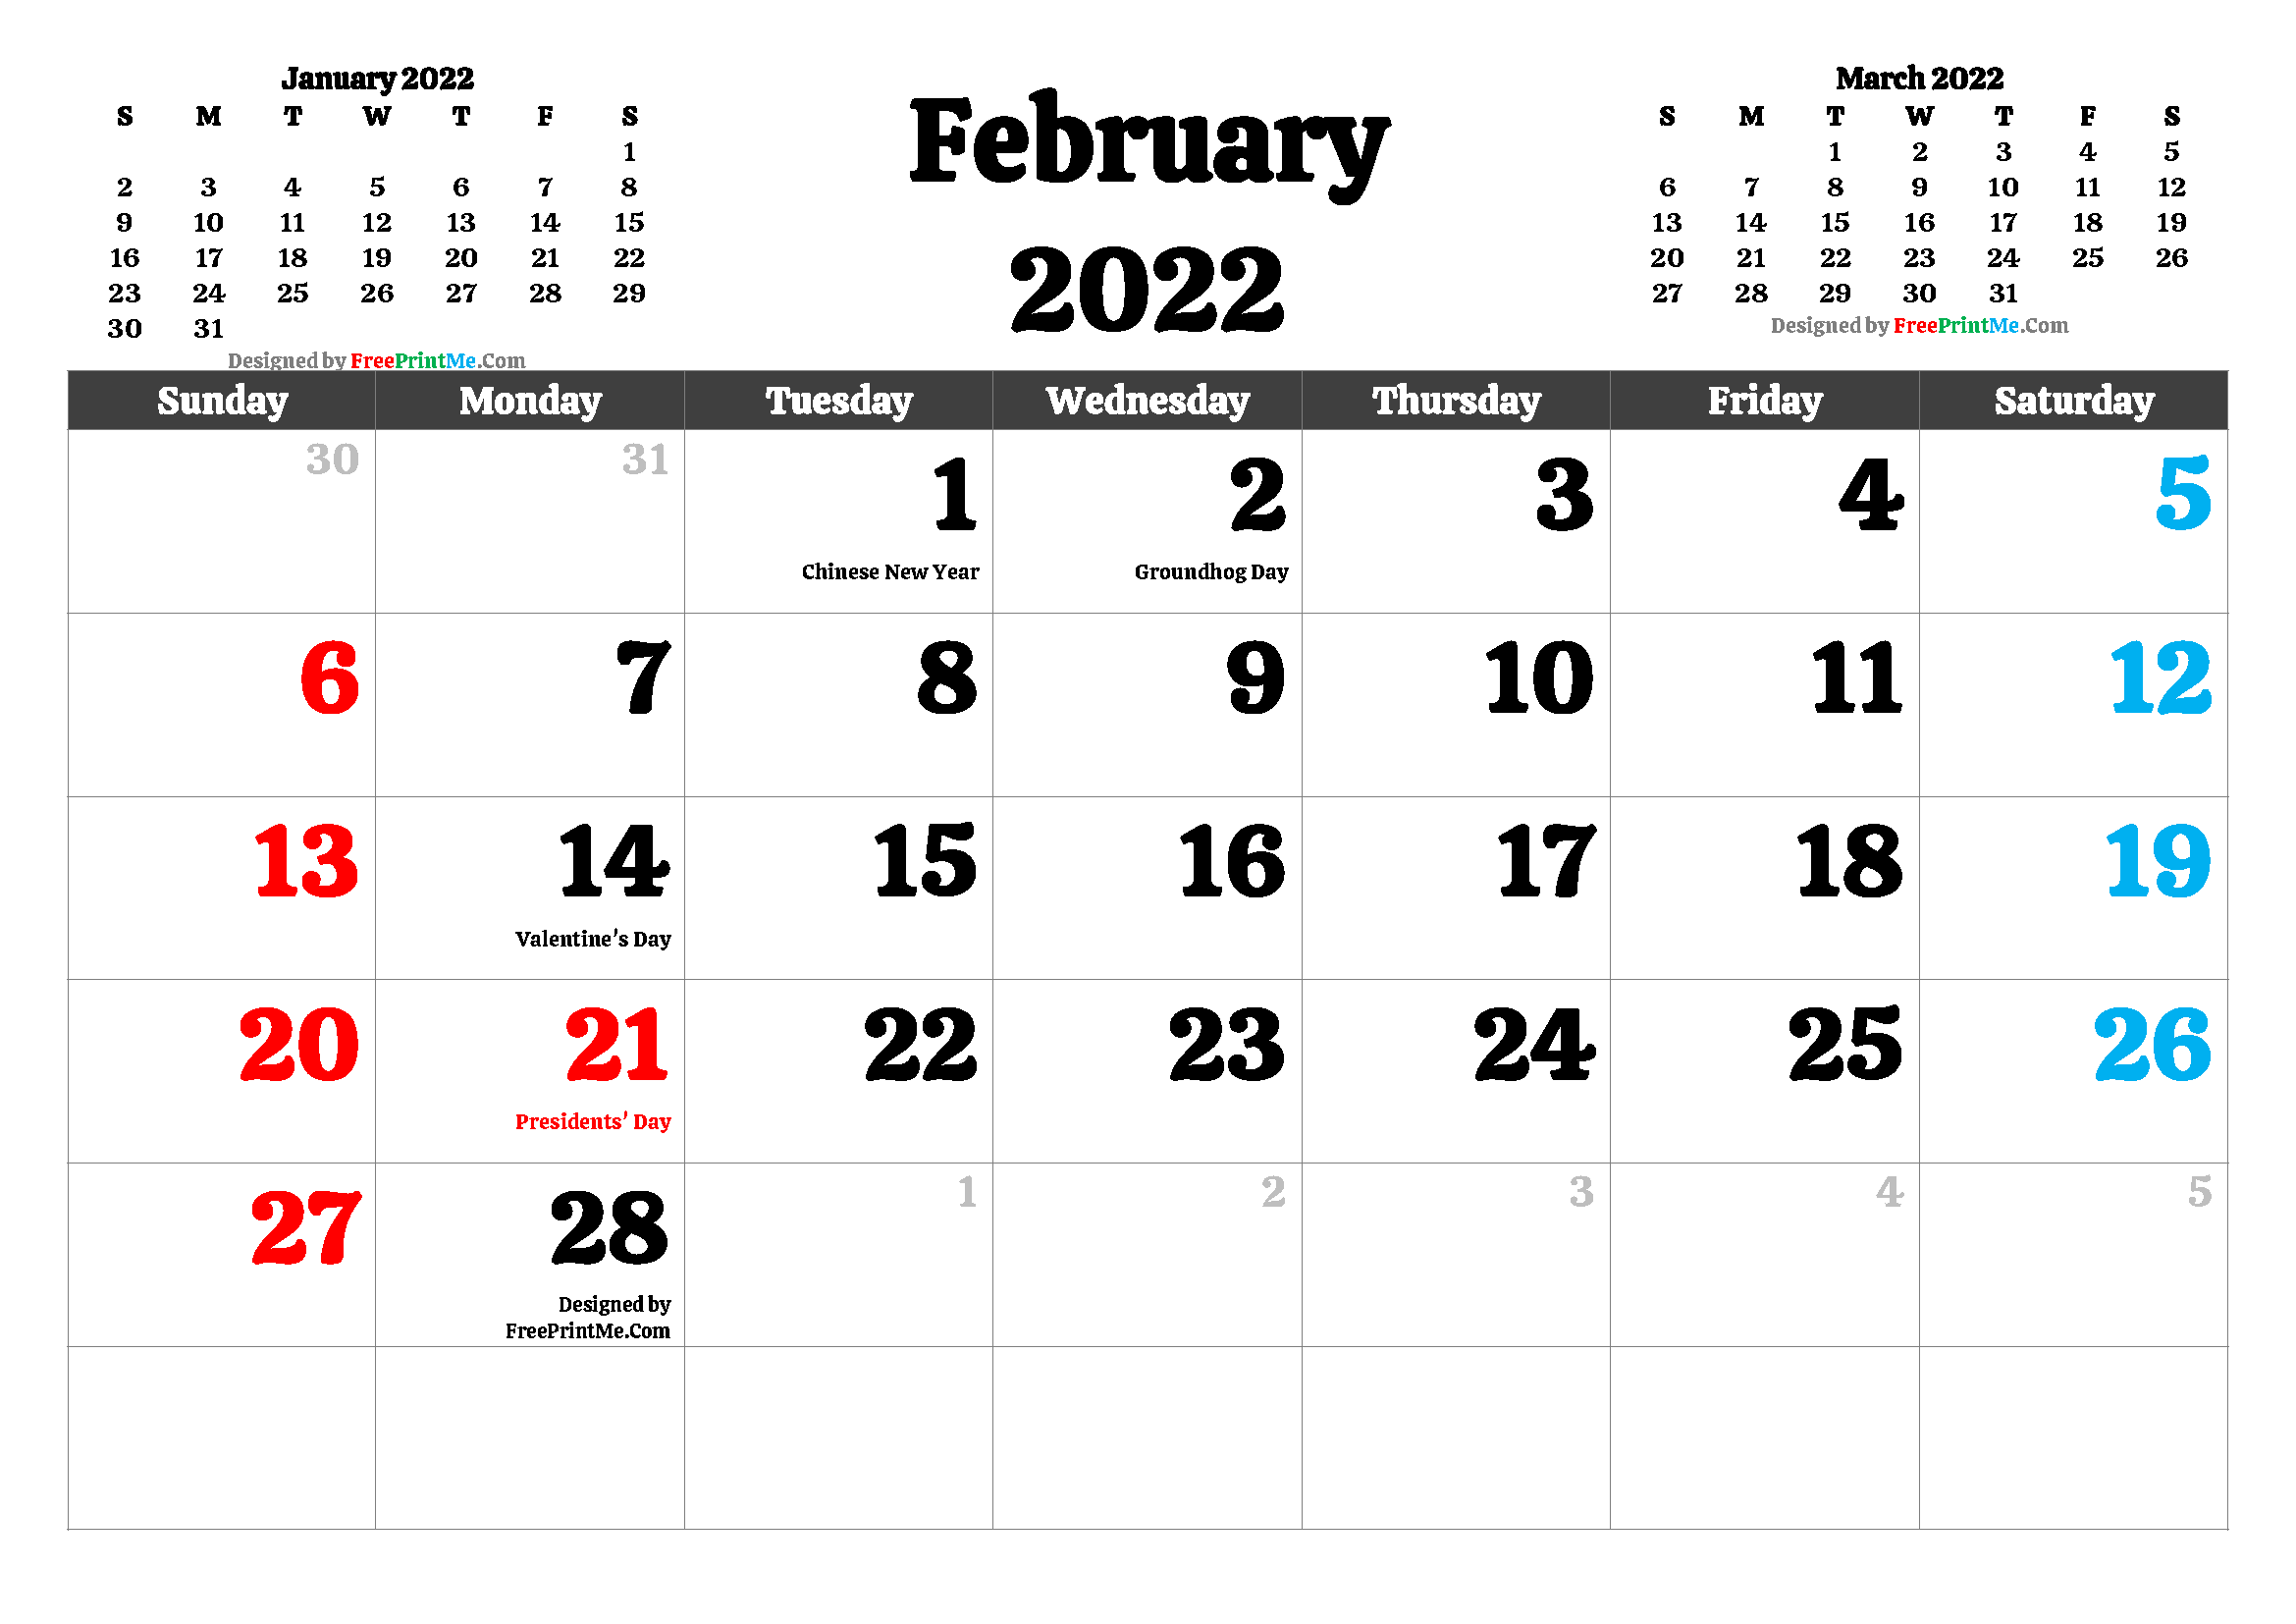 February 2022 Calendar Template Free Printable February 2022 Calendar Pdf And Image